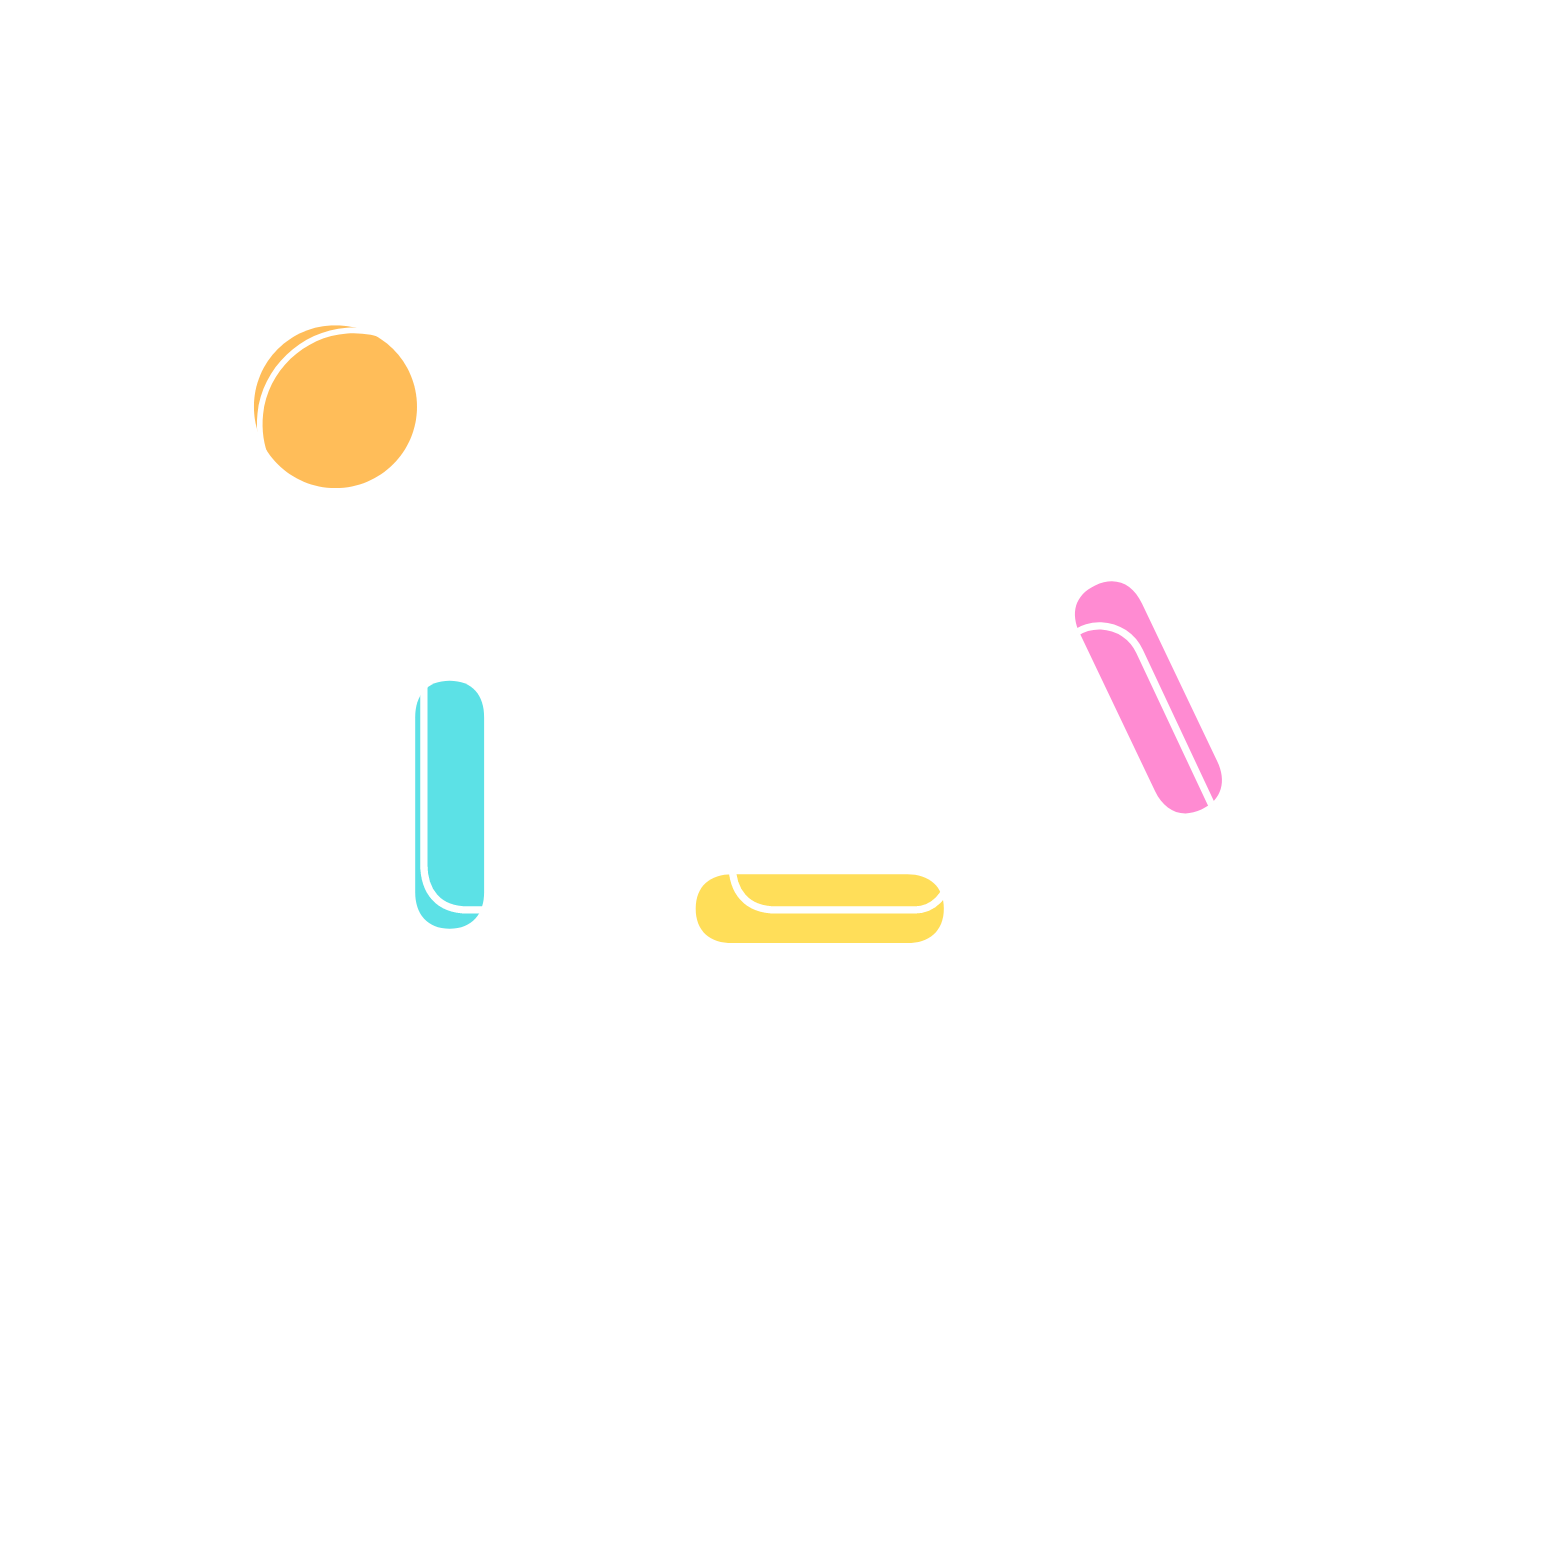 Idea Facts